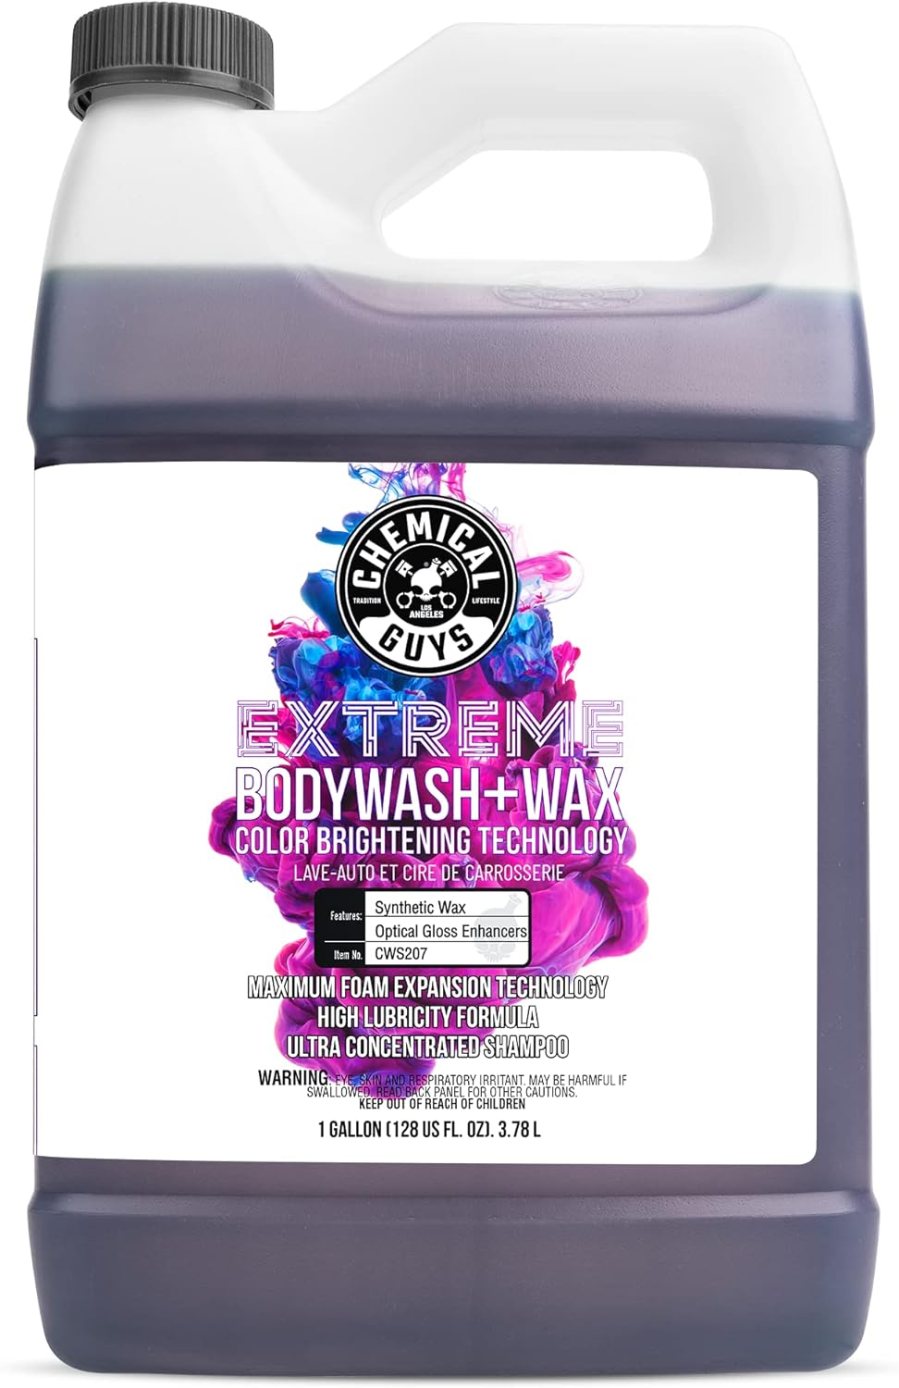 Chemical guys bodywash and wax 